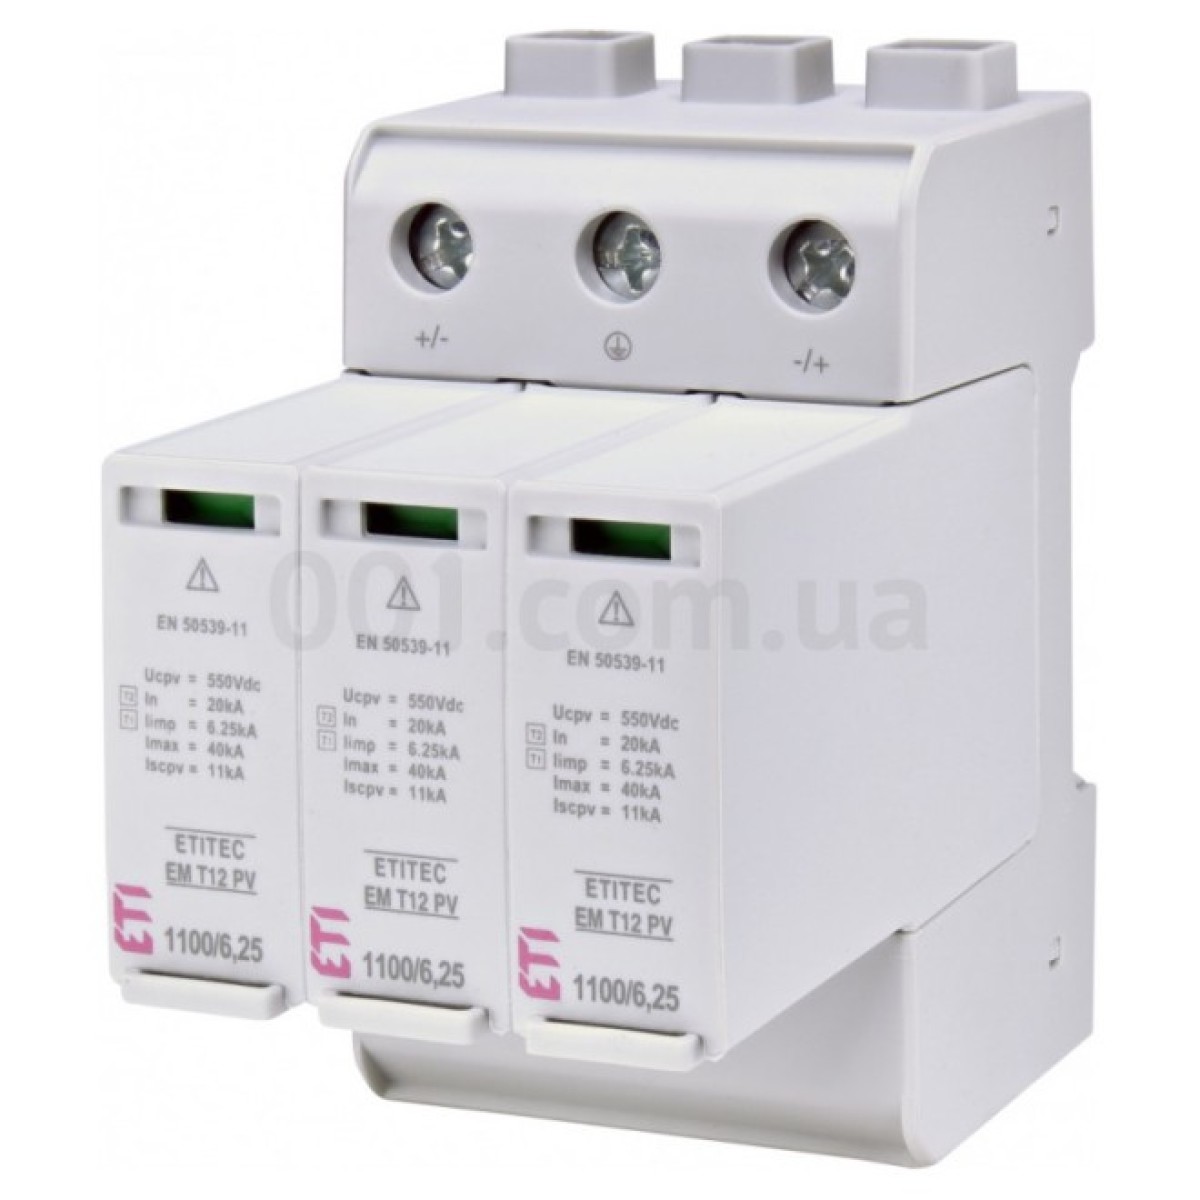 Ограничитель перенапряжения ETITEC EM T12 PV 1100/6,25 Y (для PV систем), ETI 256_256.jpg